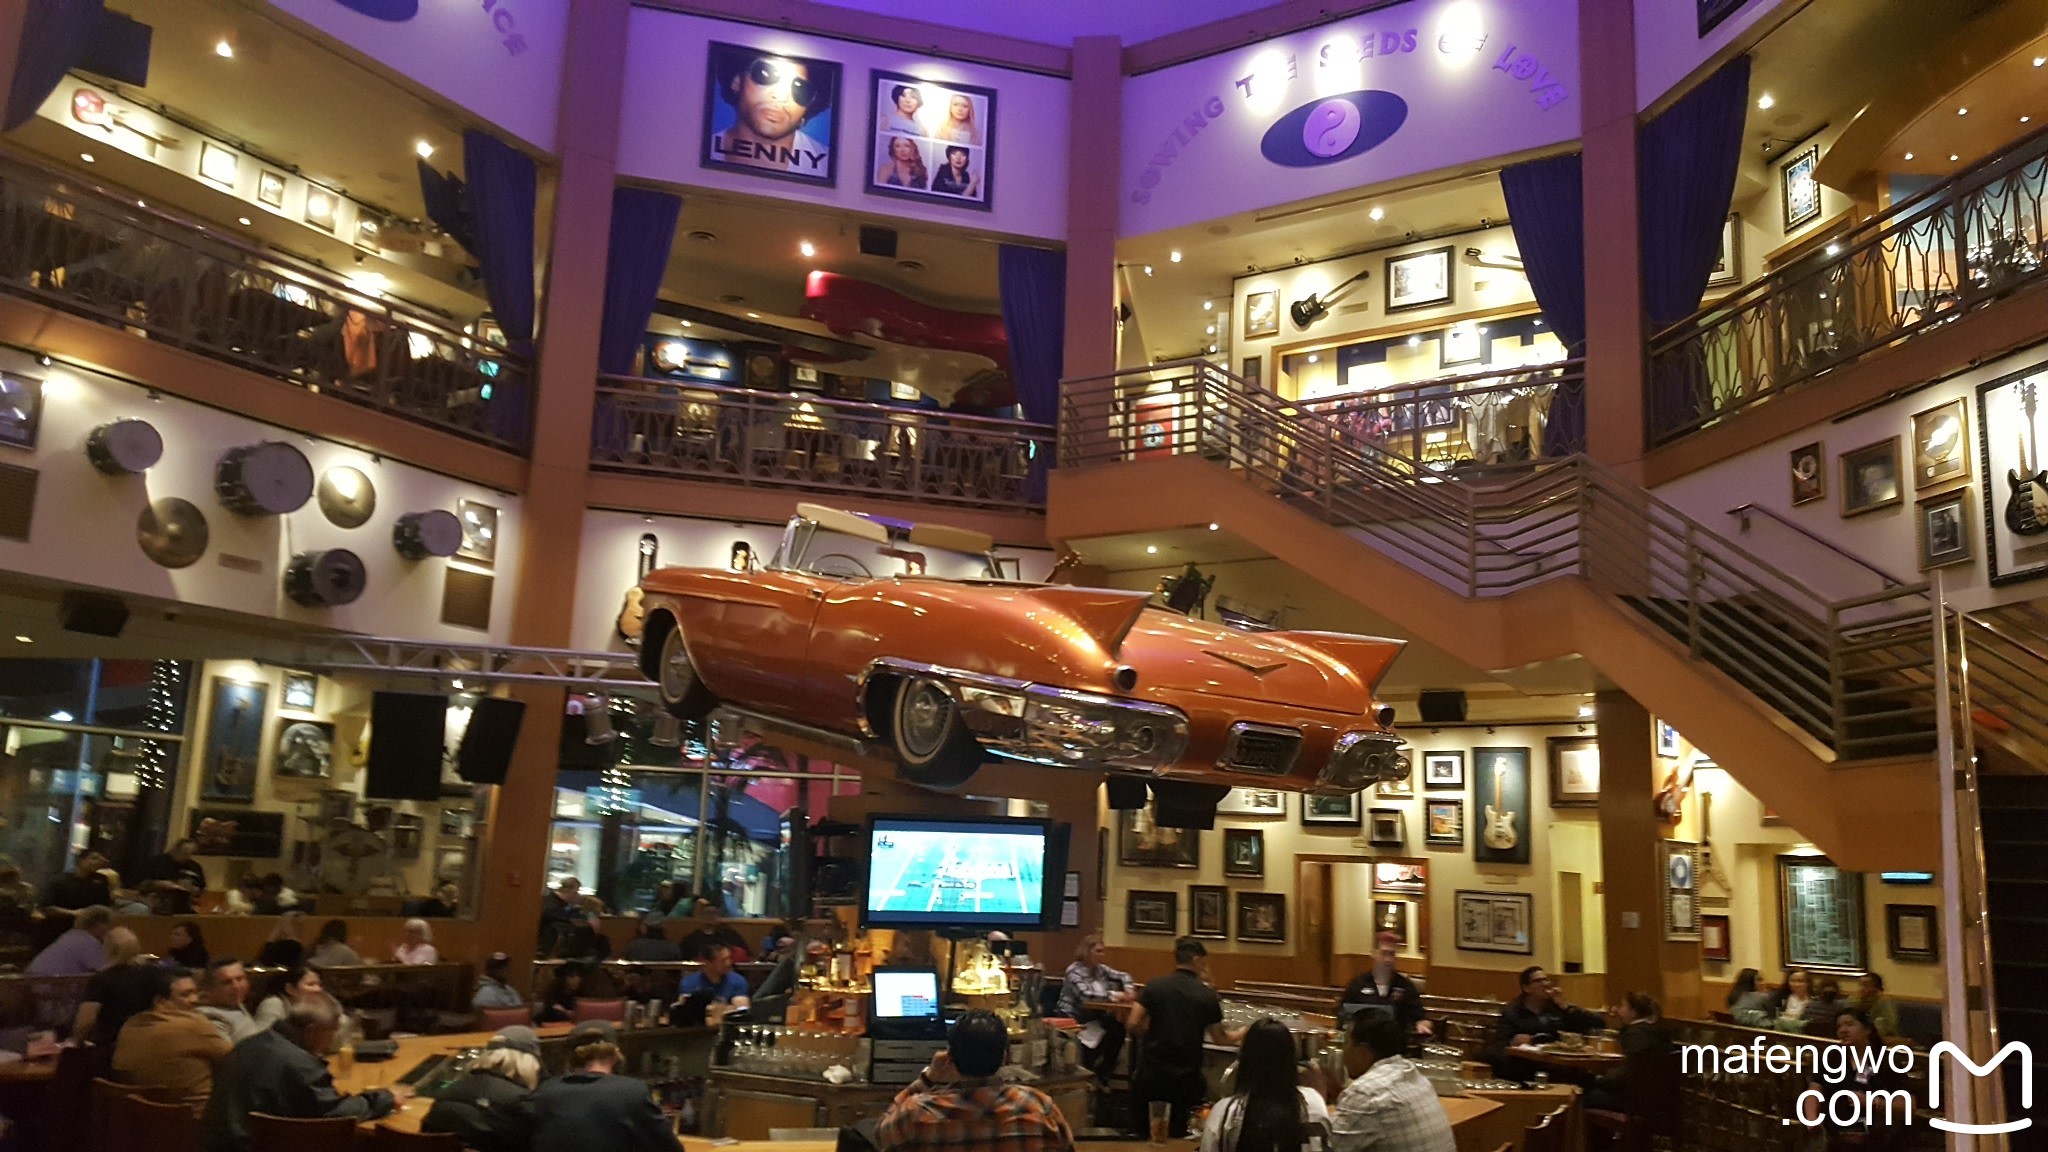 Hard Rock Cafe Hollywood at Universal CityWalk